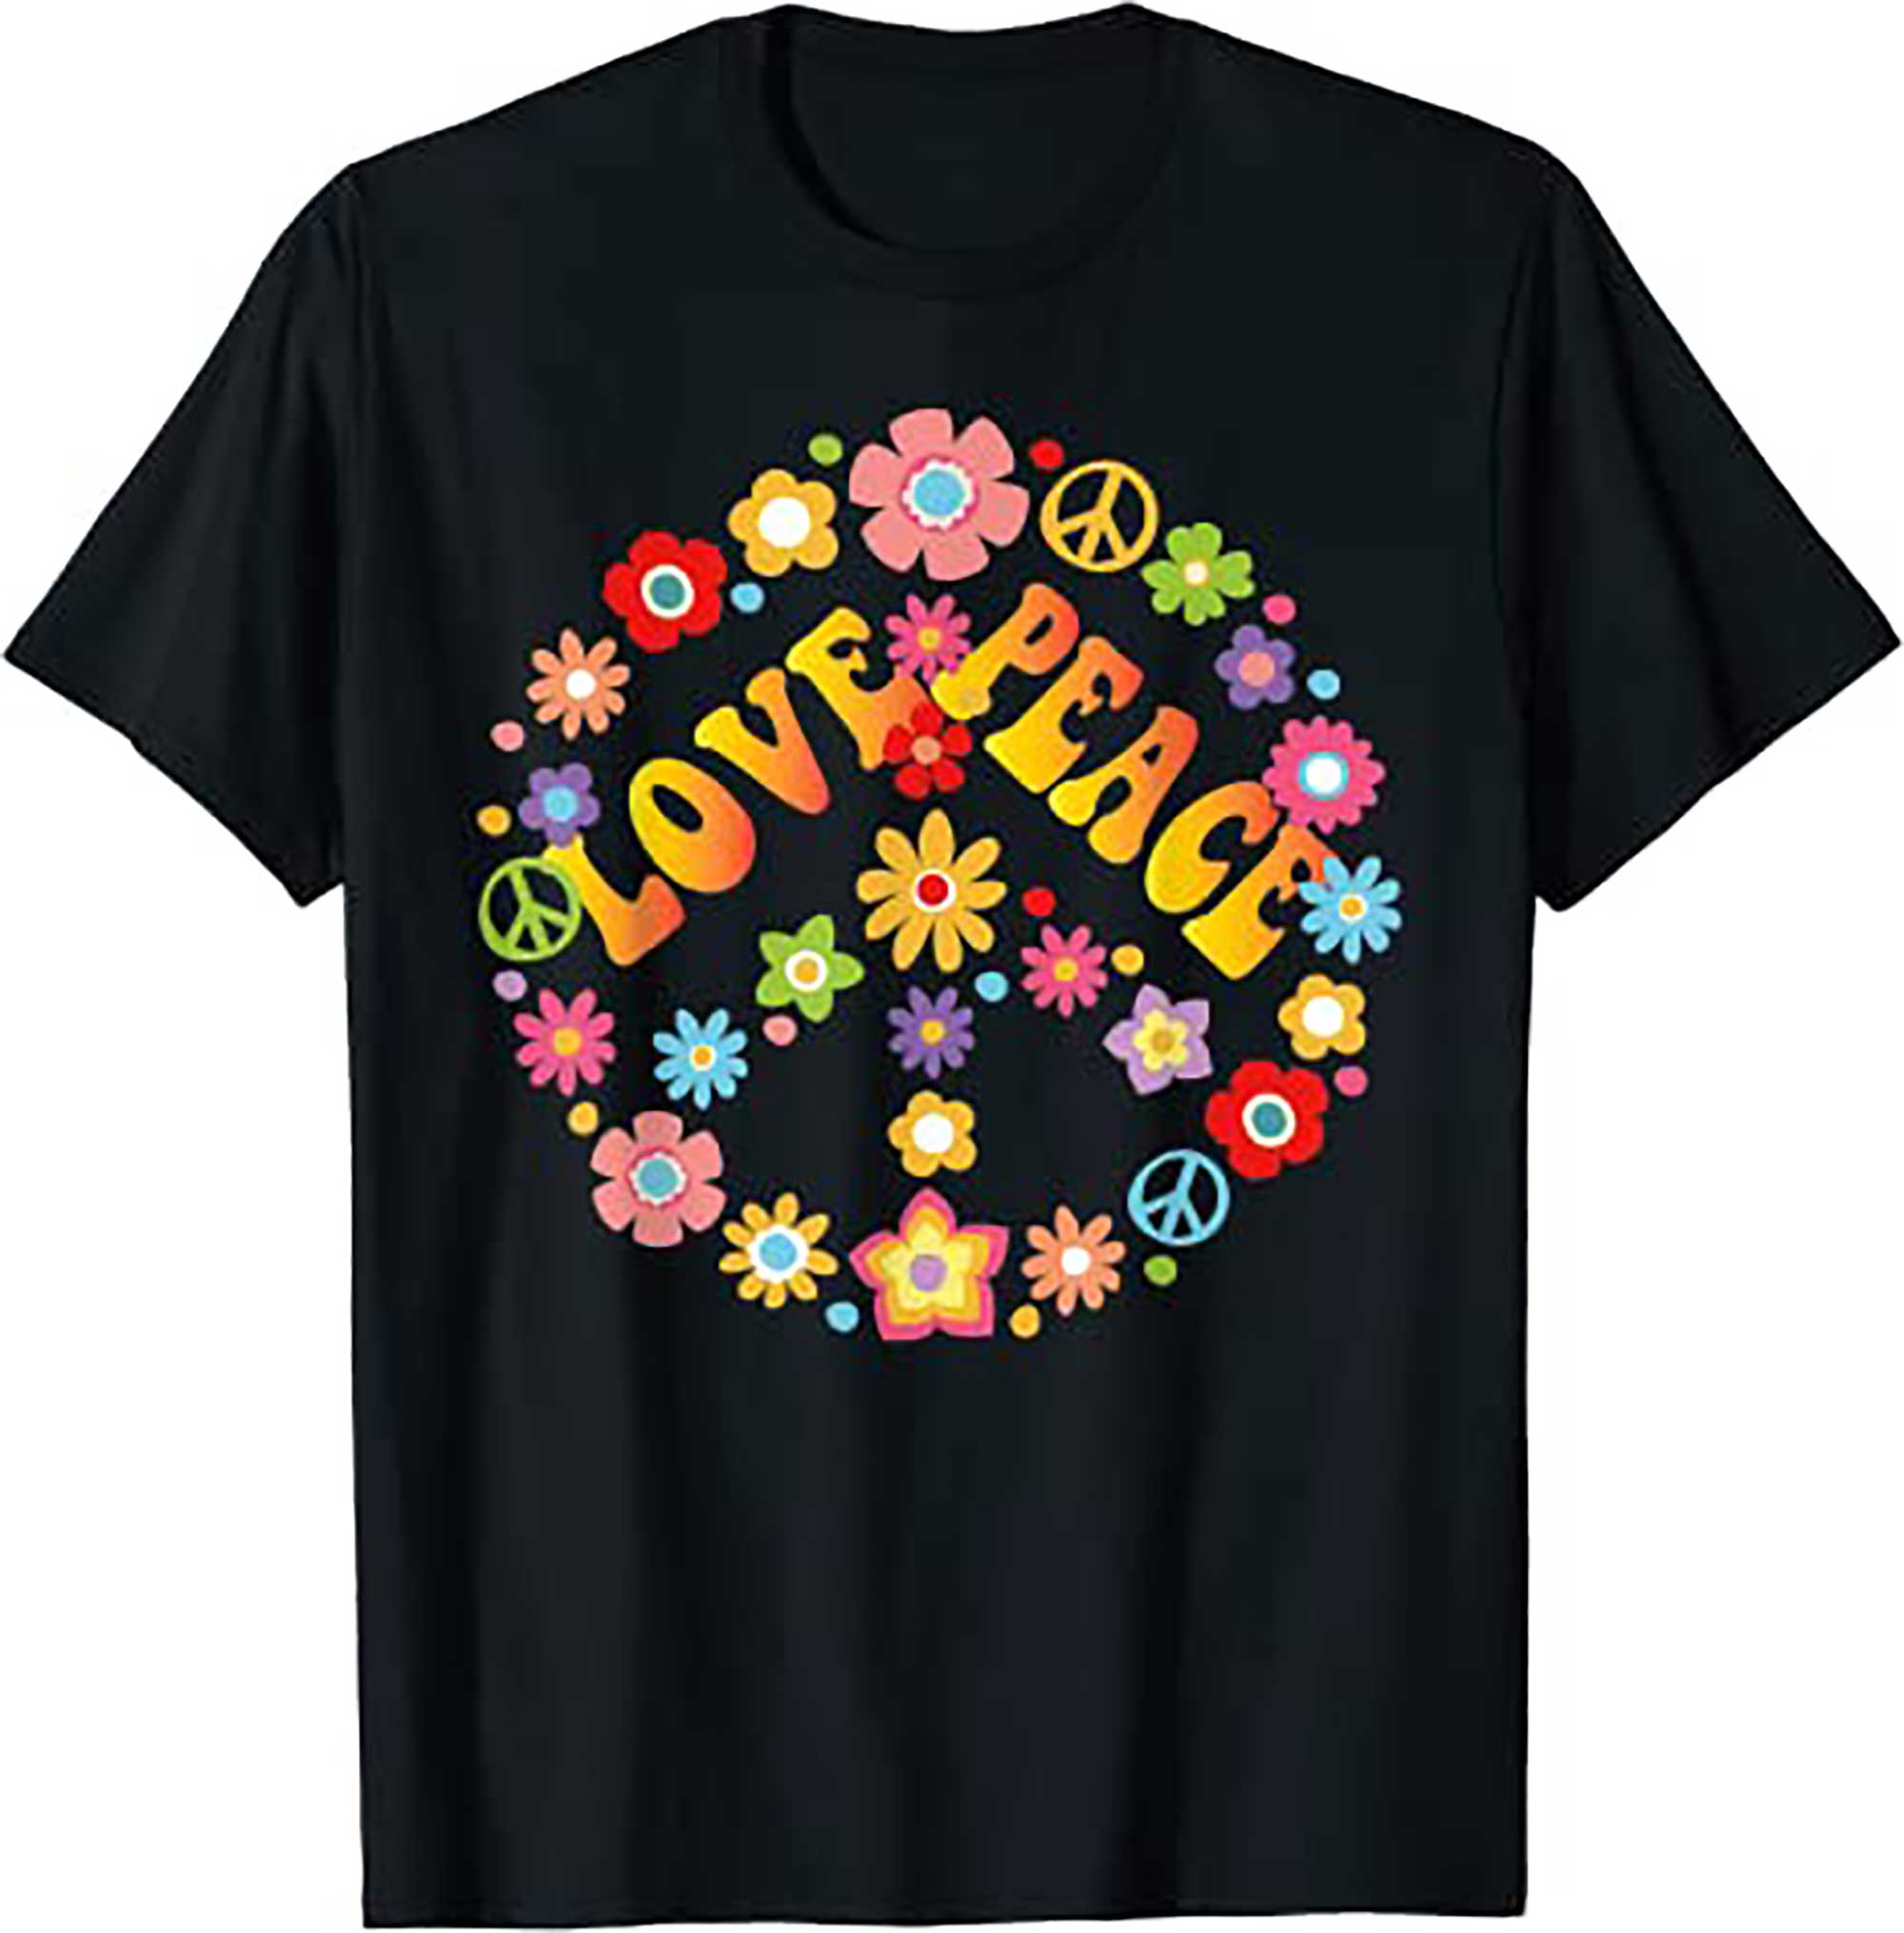 PEACE SIGN LOVE T Shirt 60s 70s Tie Dye Hippie Costume Shirt T Shirt